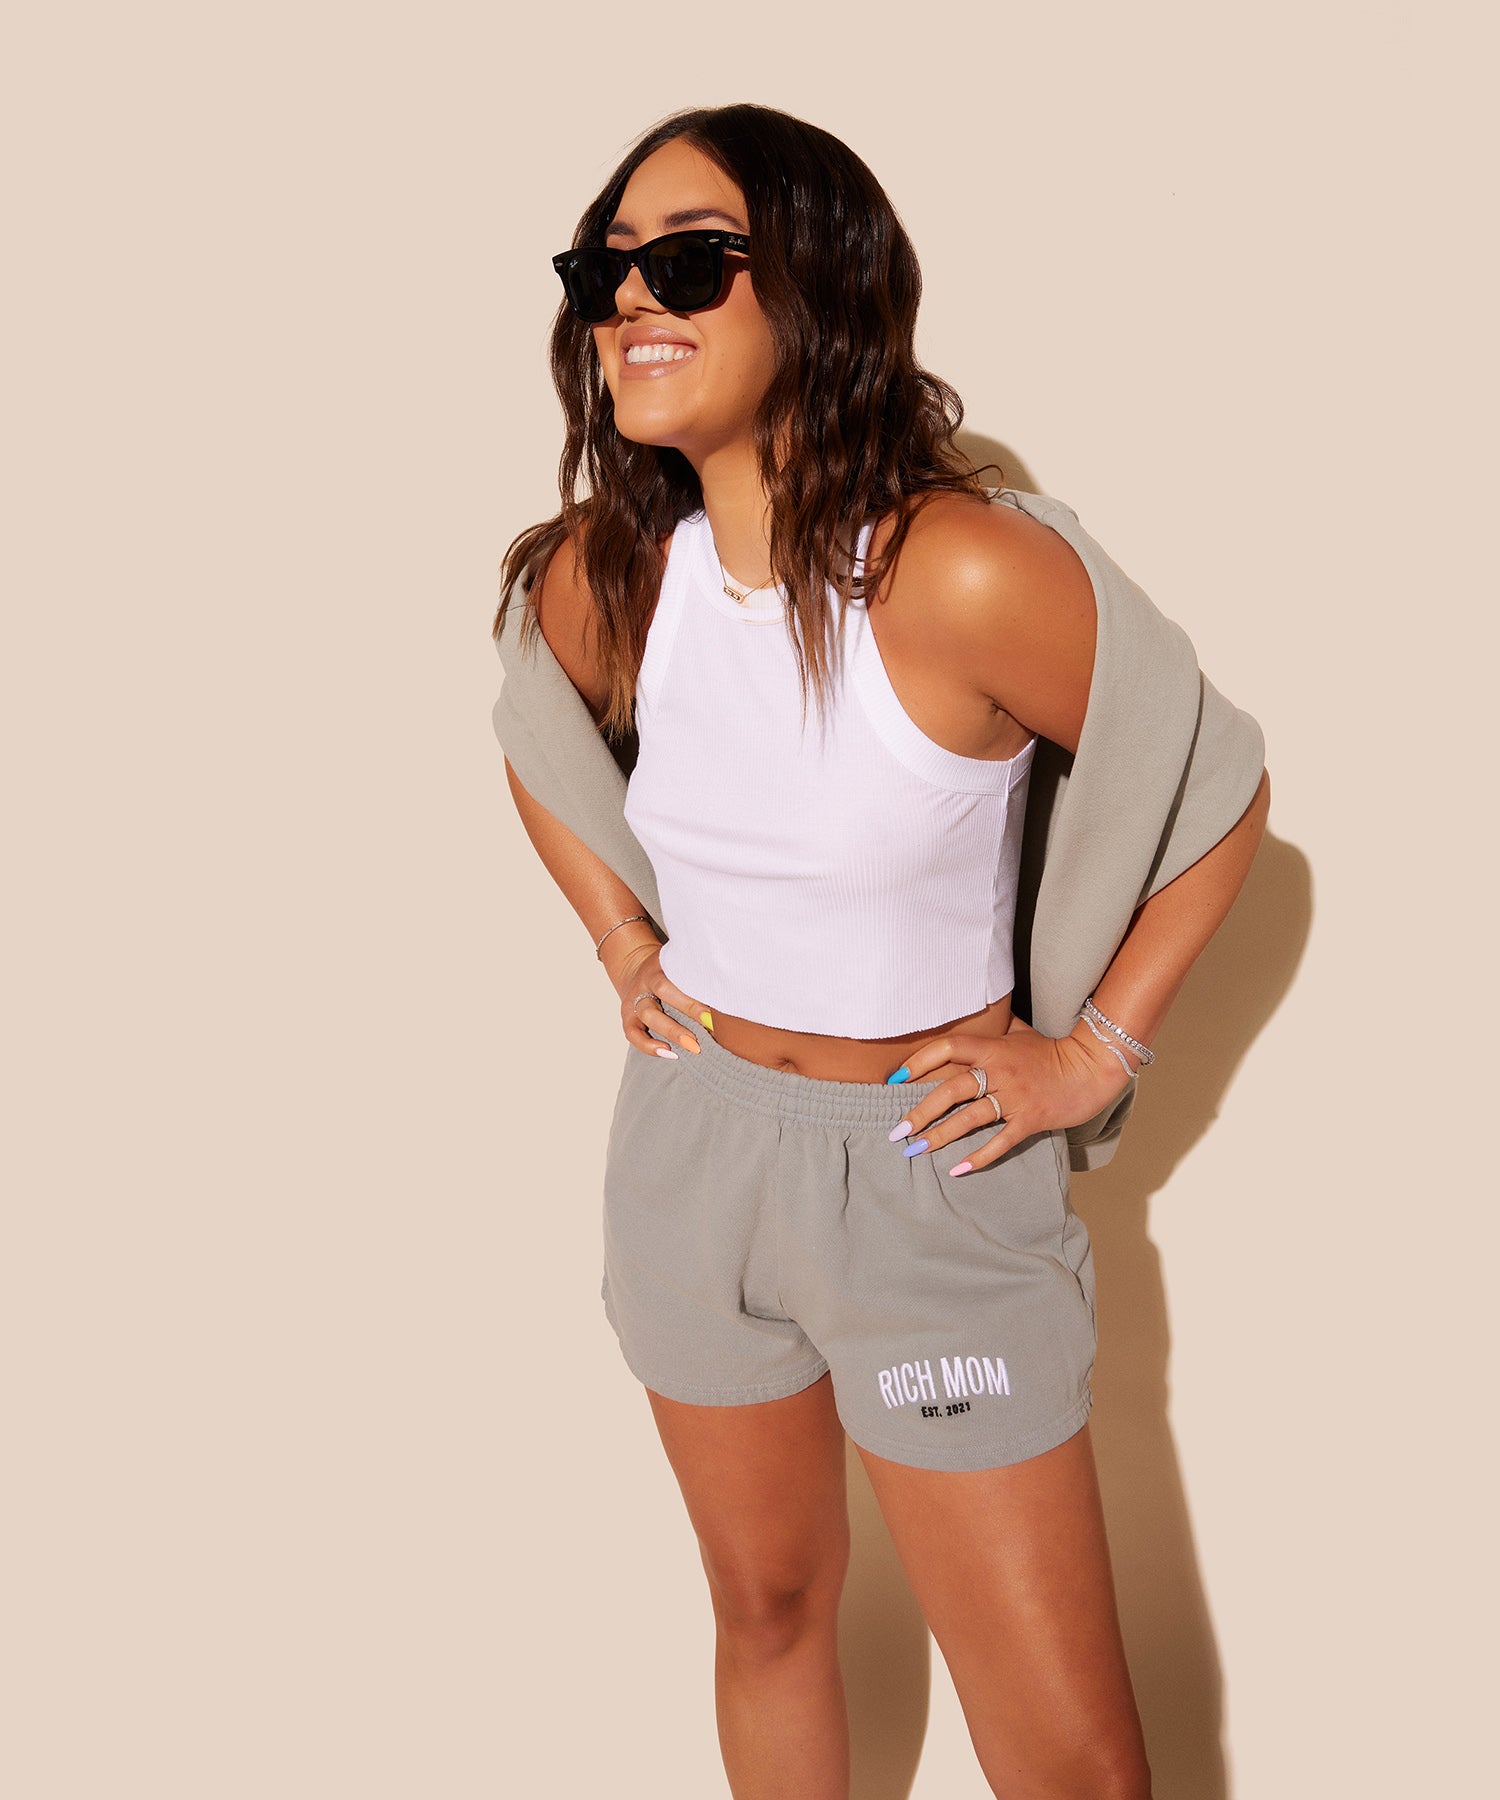 Tinx wears Rich Mom Gear: Essentials Shorts in Viche Grey